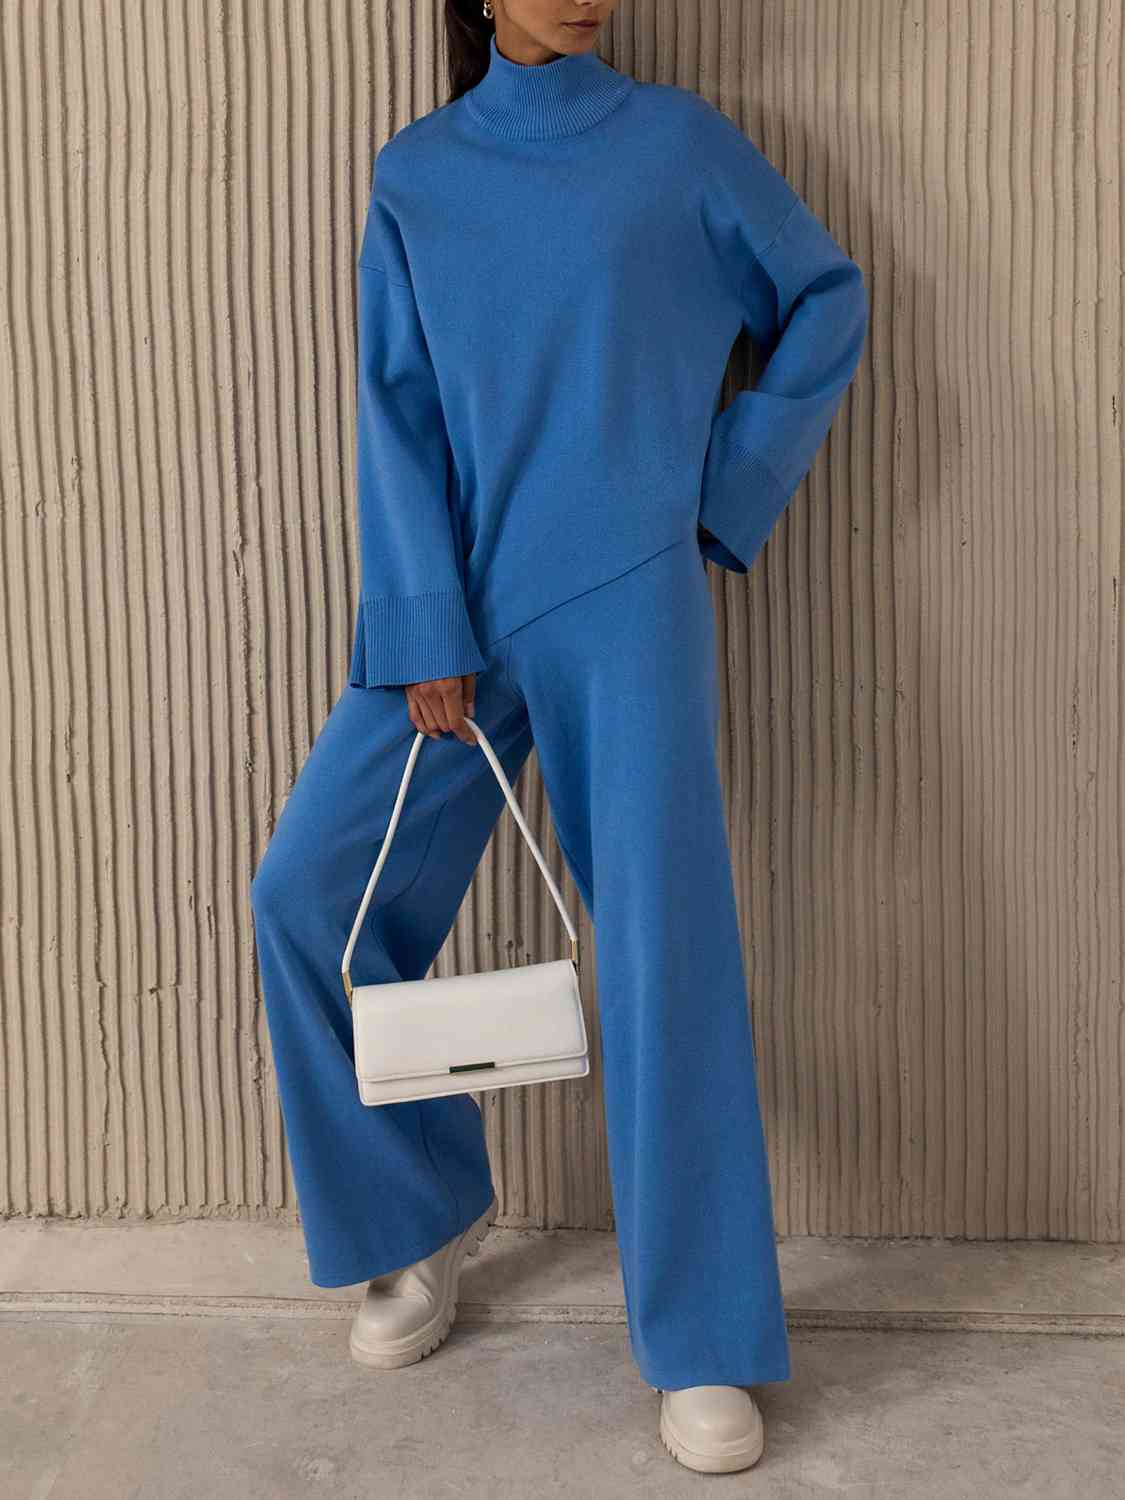 Women's Asymmetrical Hem Knit Top and Pants Set